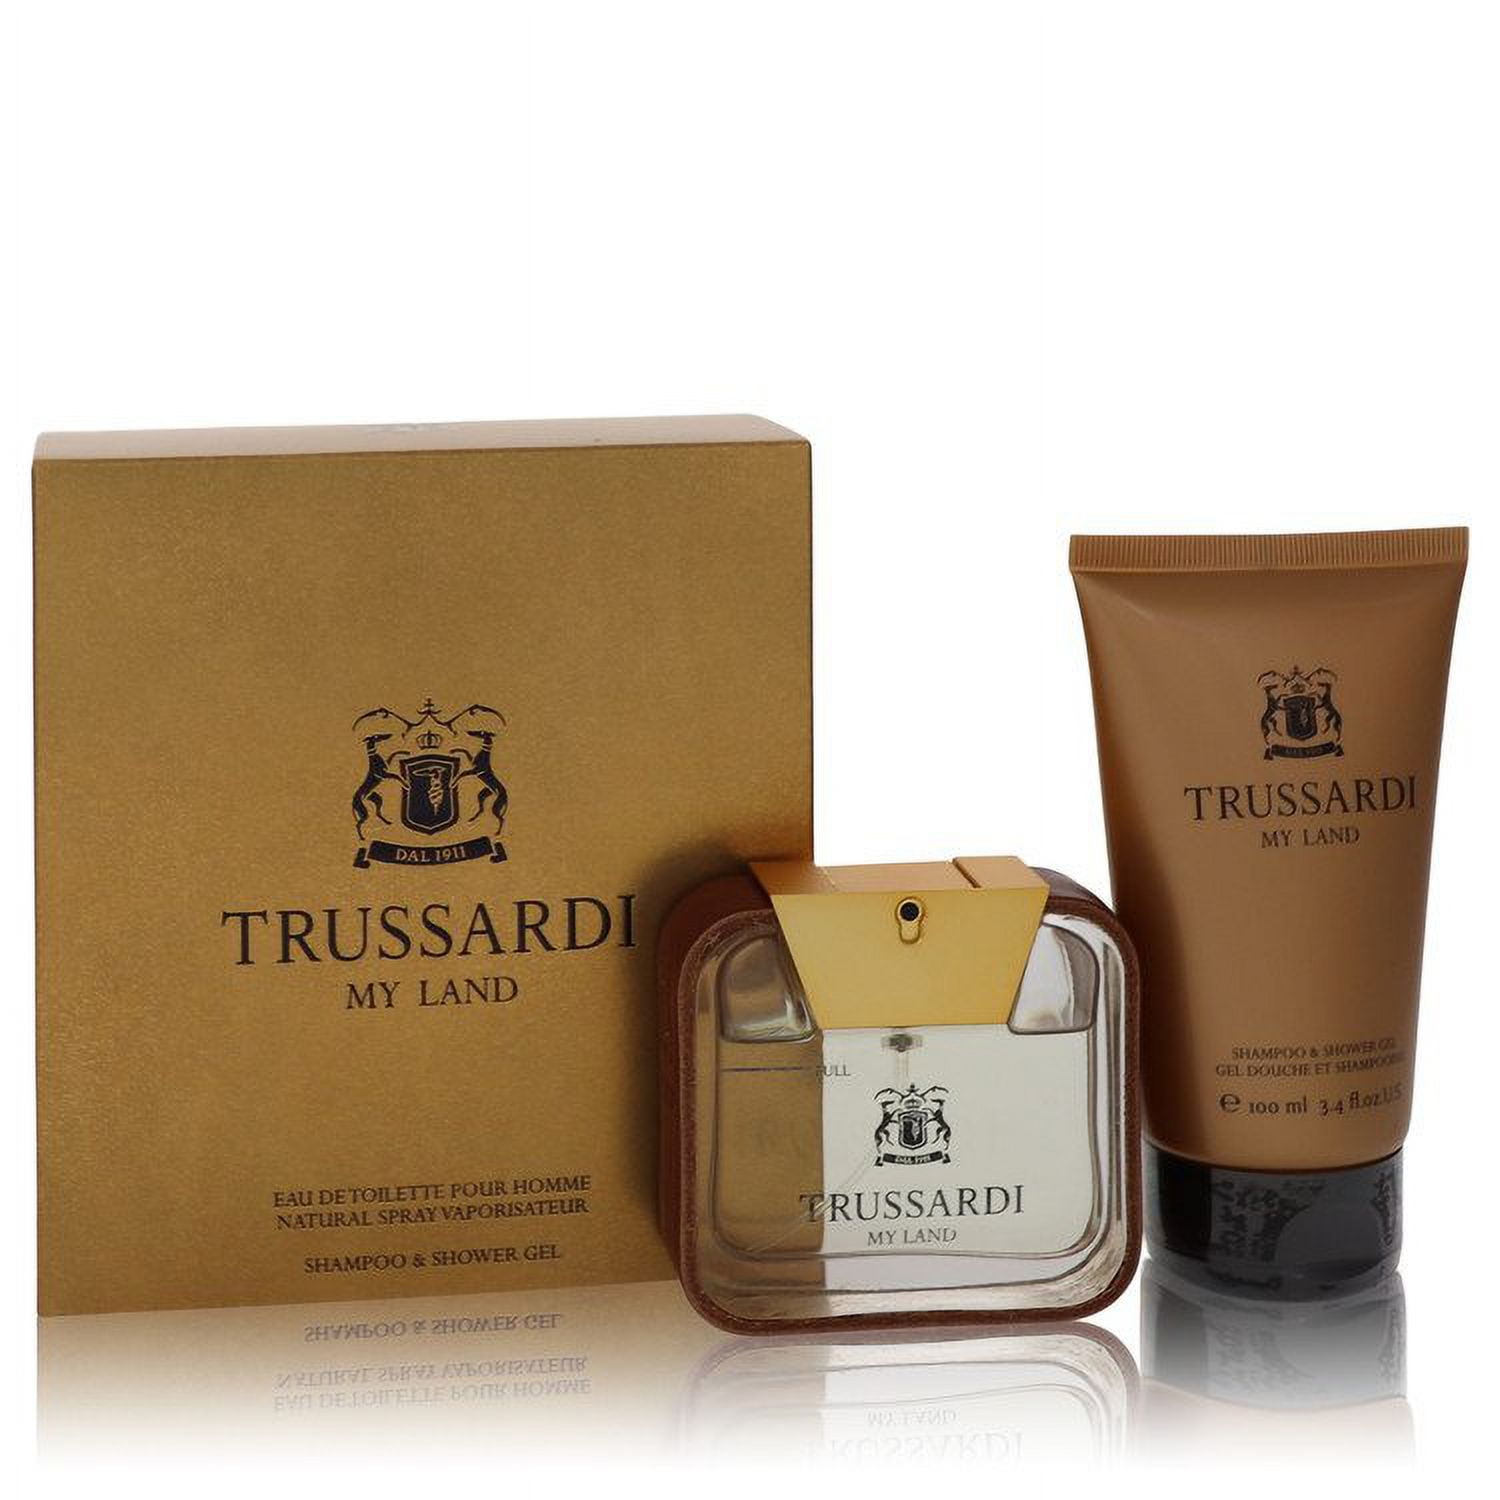 Trussardi My Land by Shower oz & Gel 1.7 Toilette Set -- Shampoo Trussardi Eau Gift De + 3.4 oz